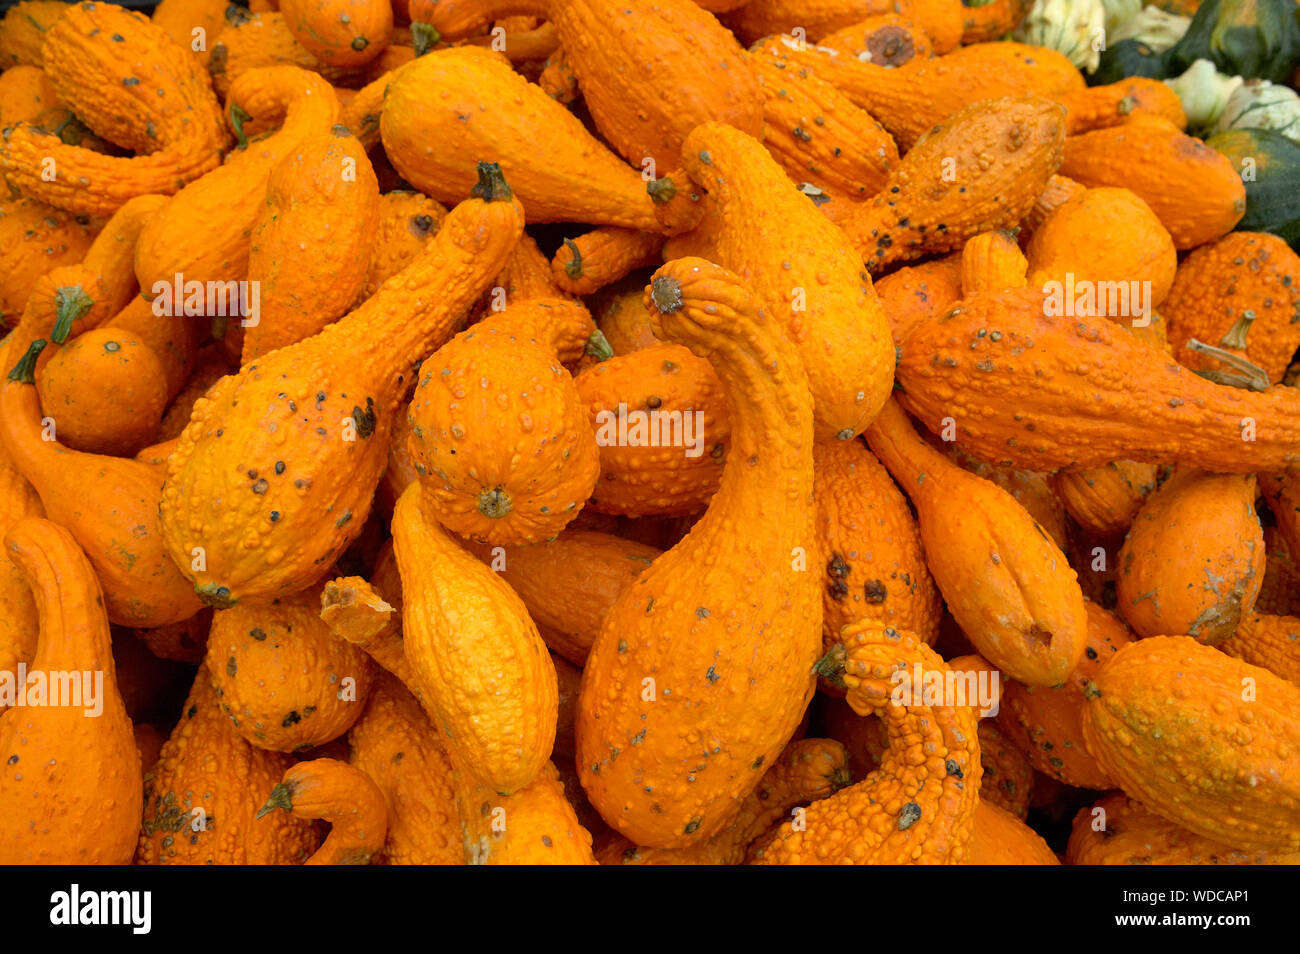 Display of orange coloured crookneck squash Stock Photo